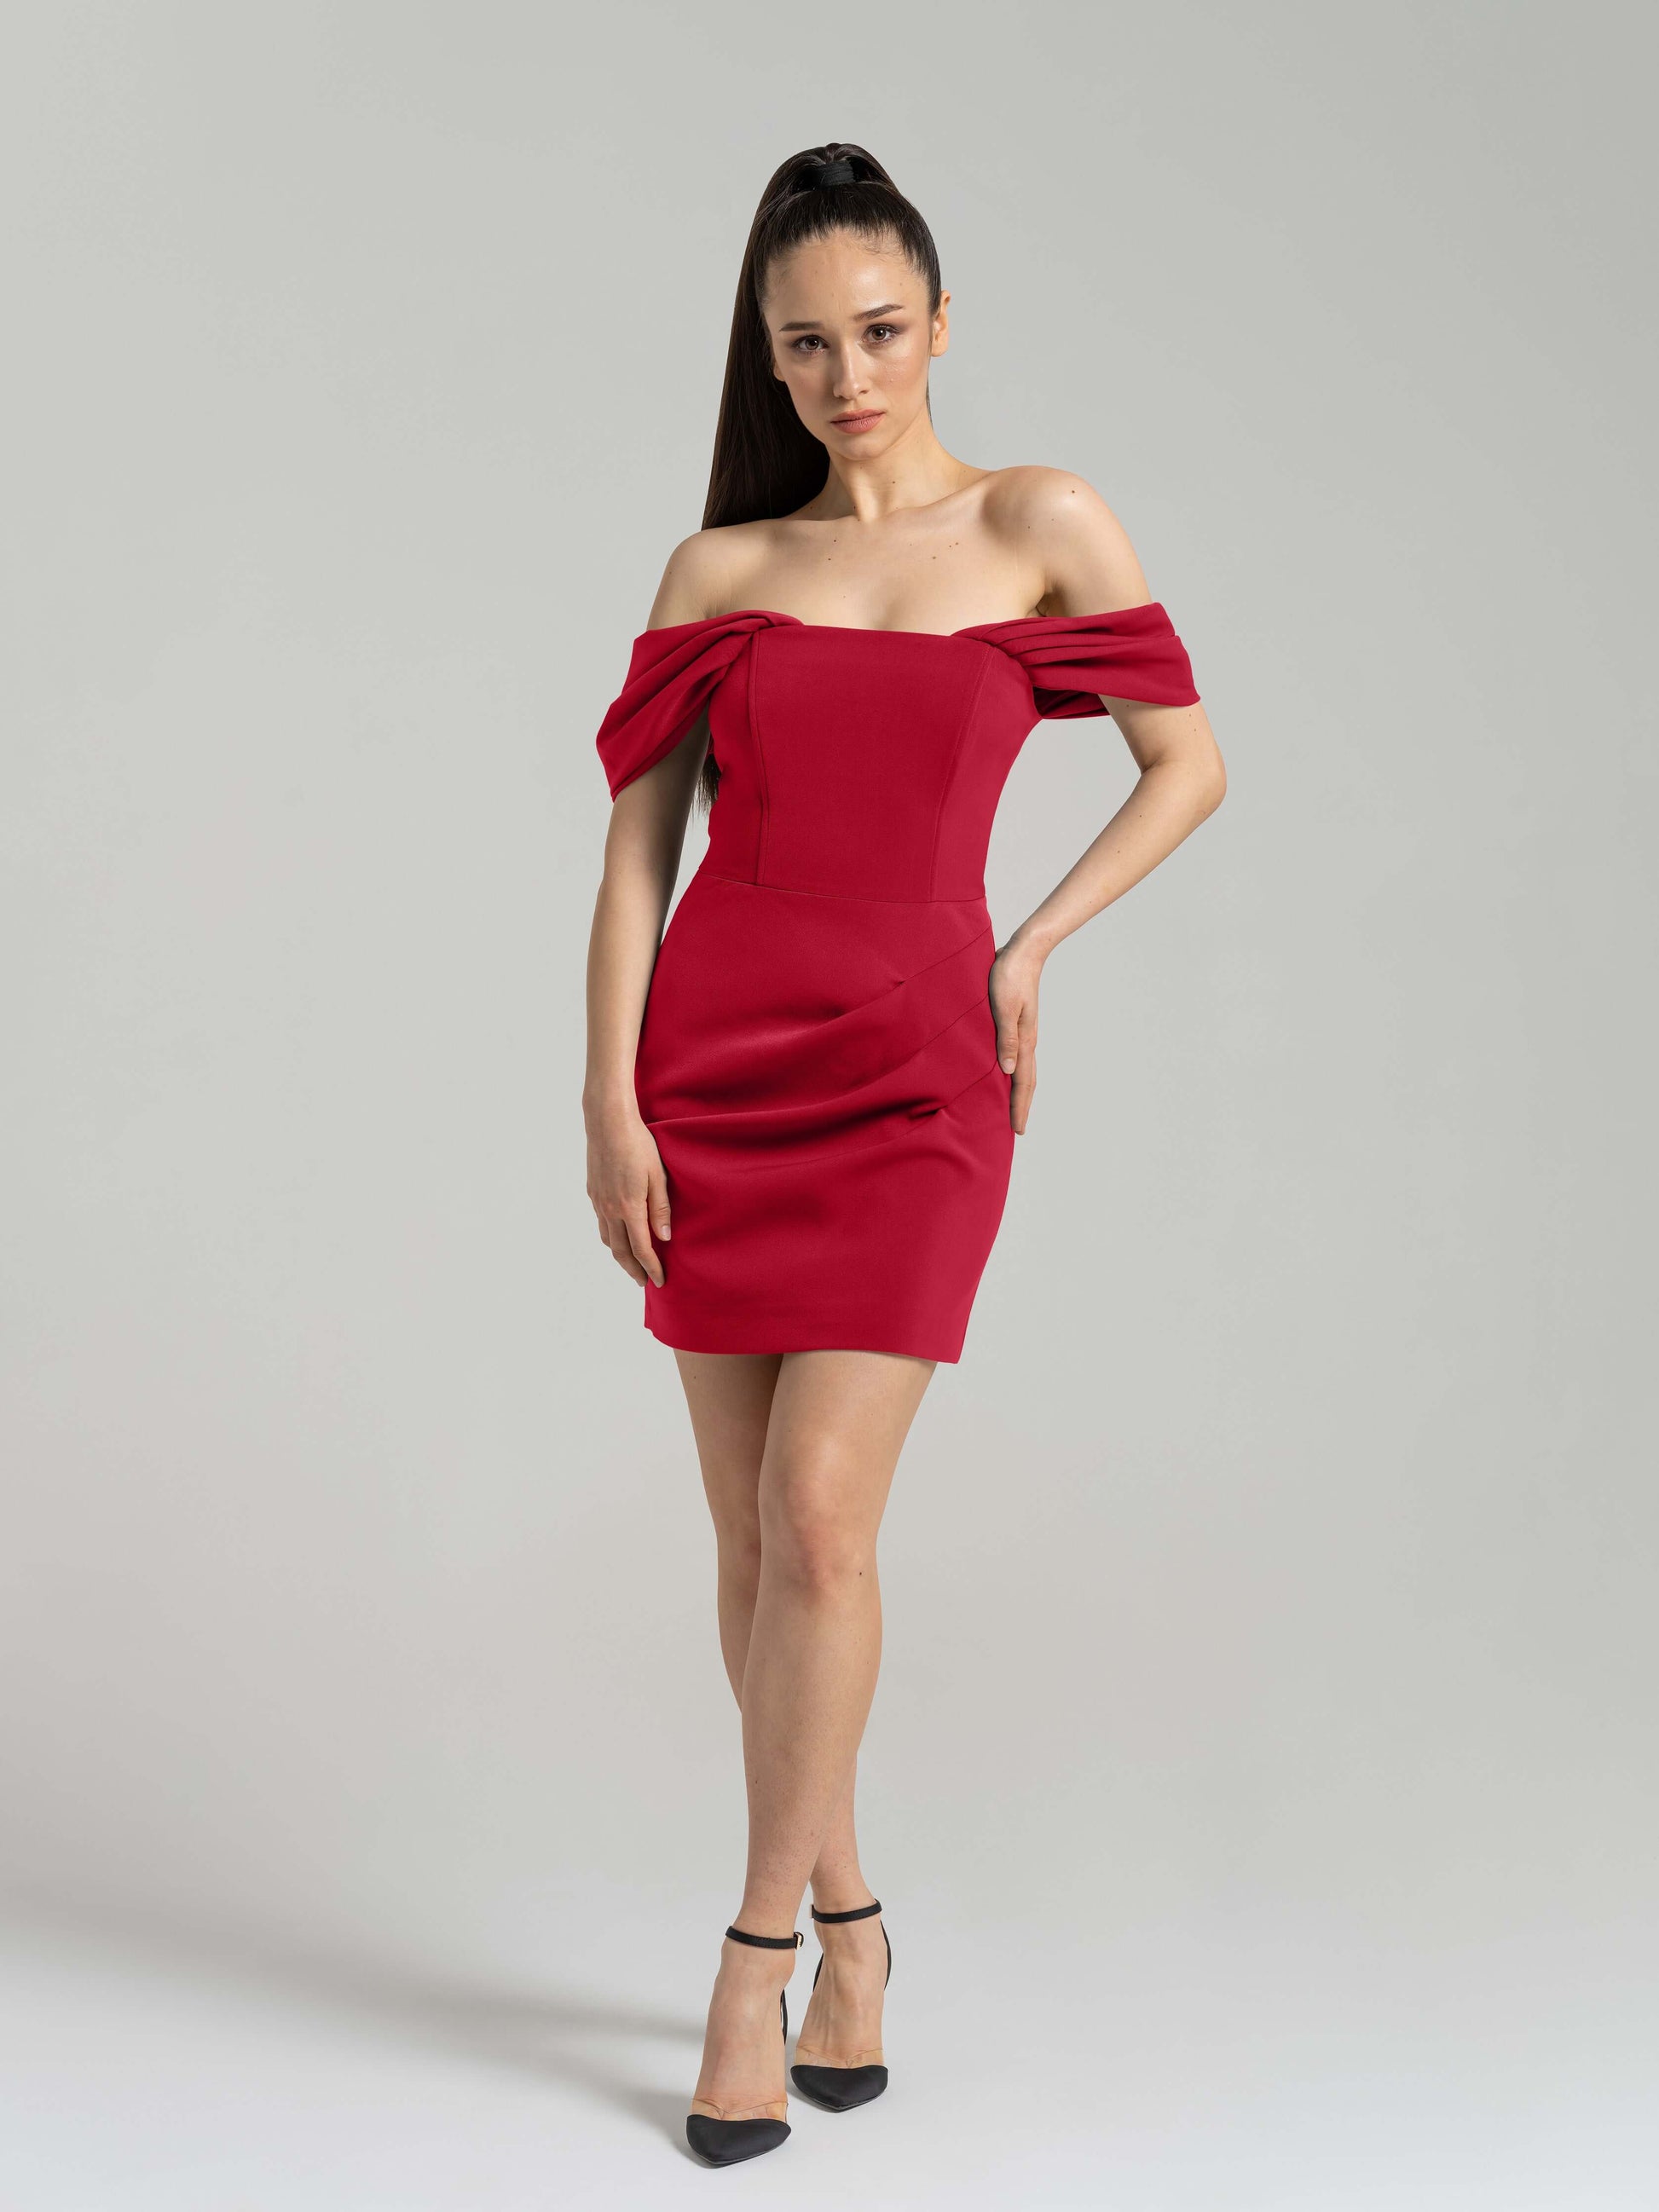 Evoking Glamour Mini Dress - Fierce Red by Tia Dorraine Women's Luxury Fashion Designer Clothing Brand